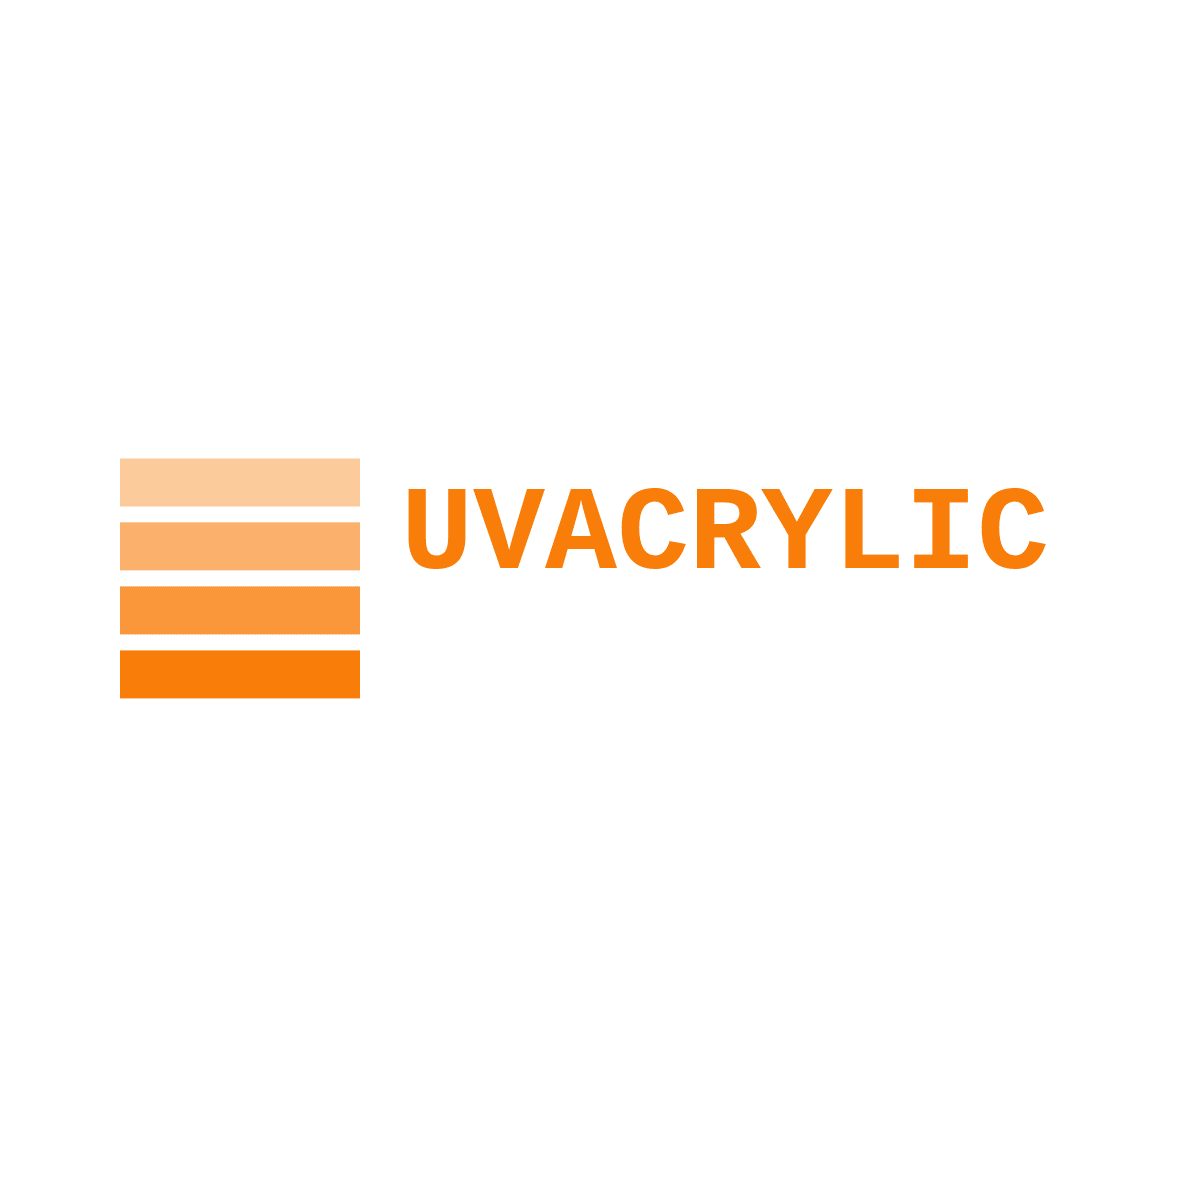 UVACRYLIC Material Technology Co., Ltd logo